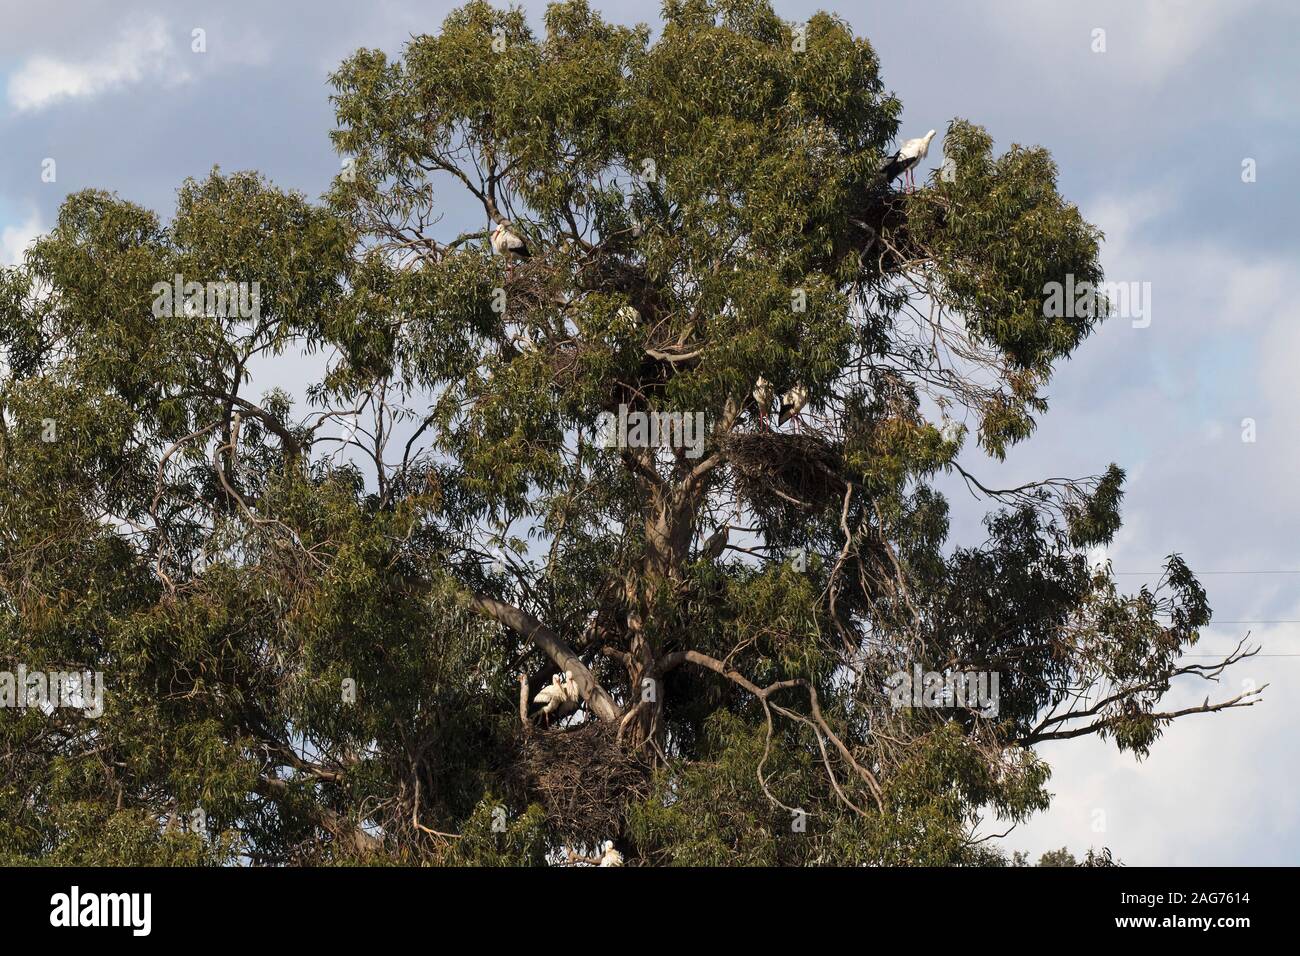 White stork Ciconia ciconia nesting in Blue gum Eucalyptus globulus near Penilhos Alentejo Region Portugal February 2017 Stock Photo